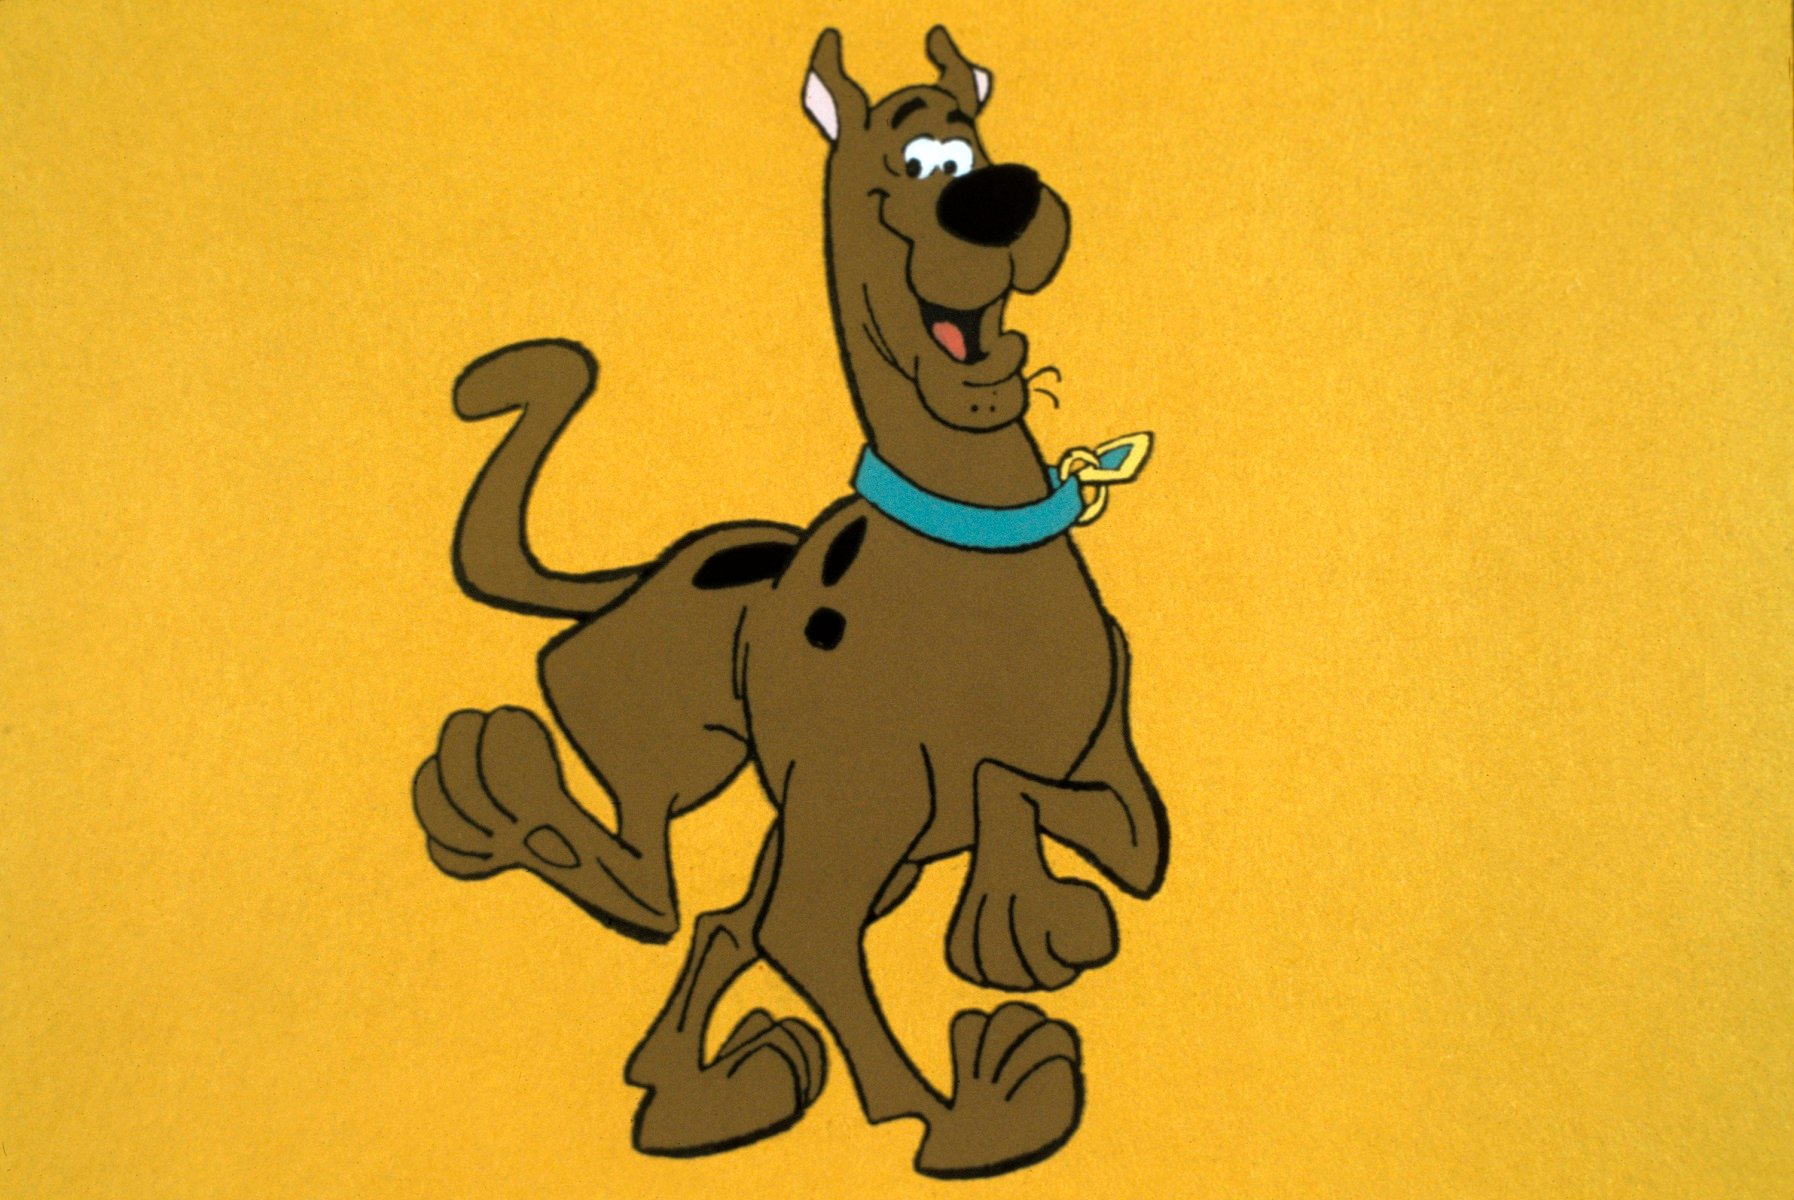 Scooby-Doo undated animation